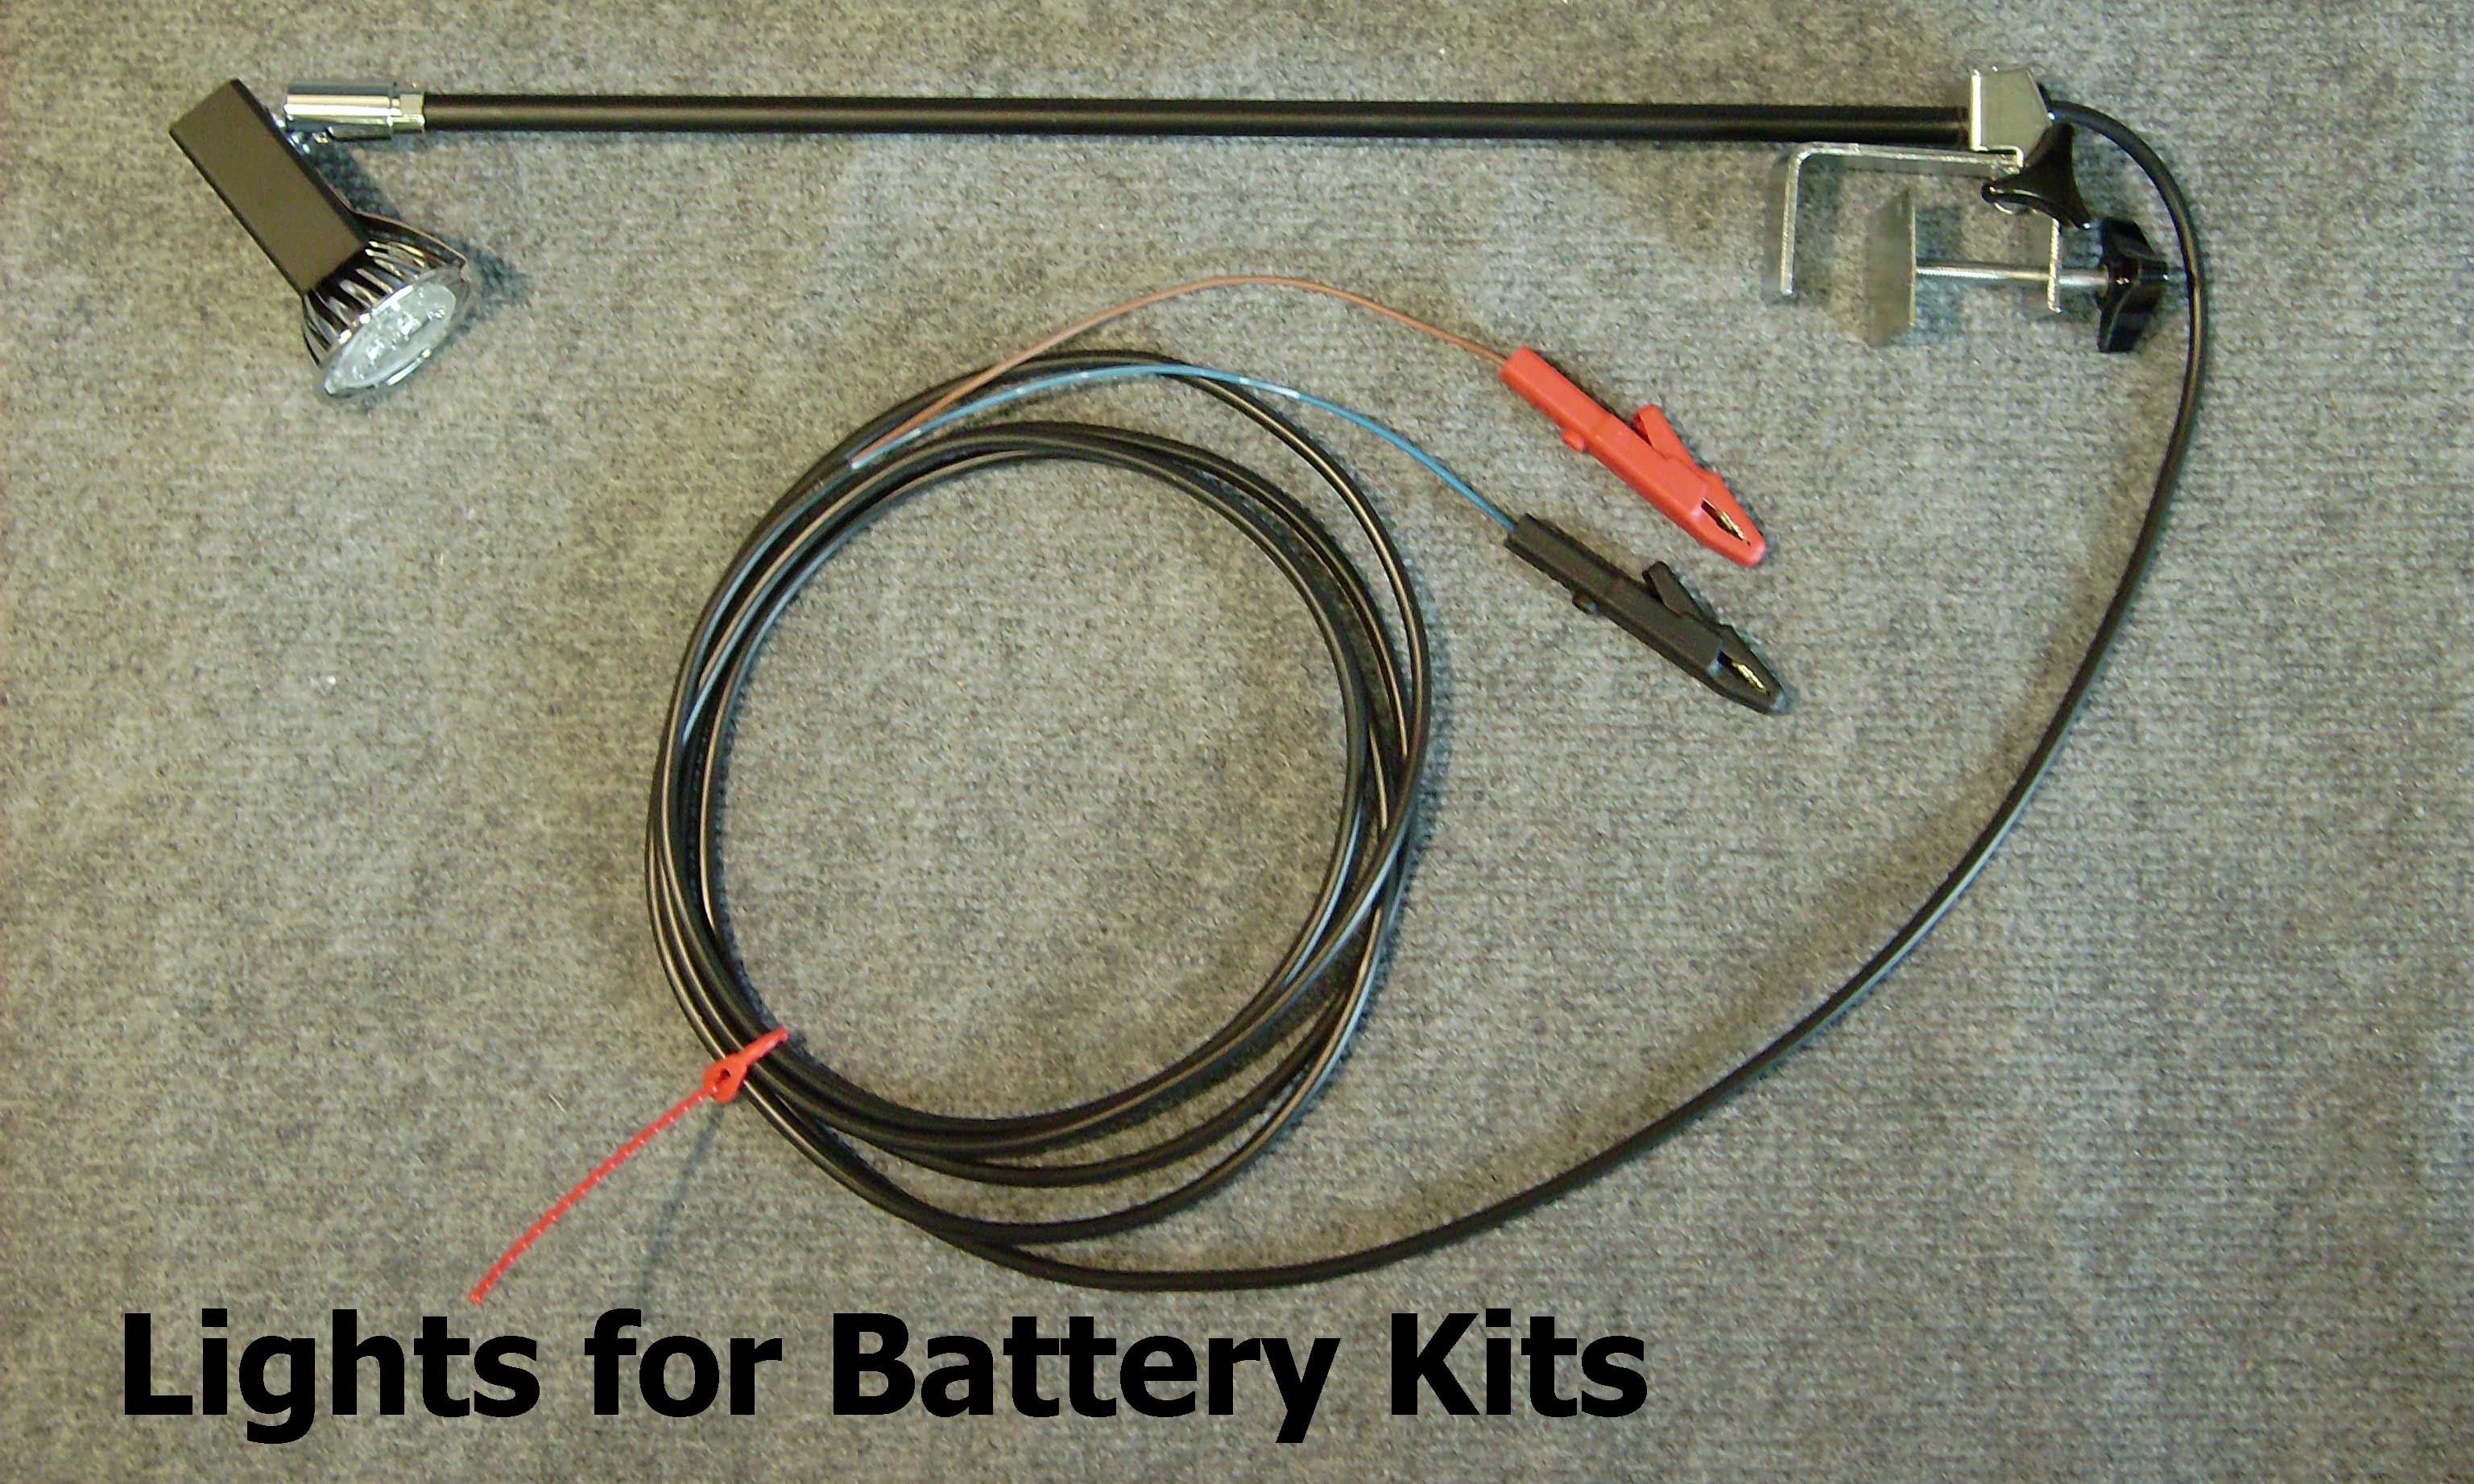 Lights for Battery Kits